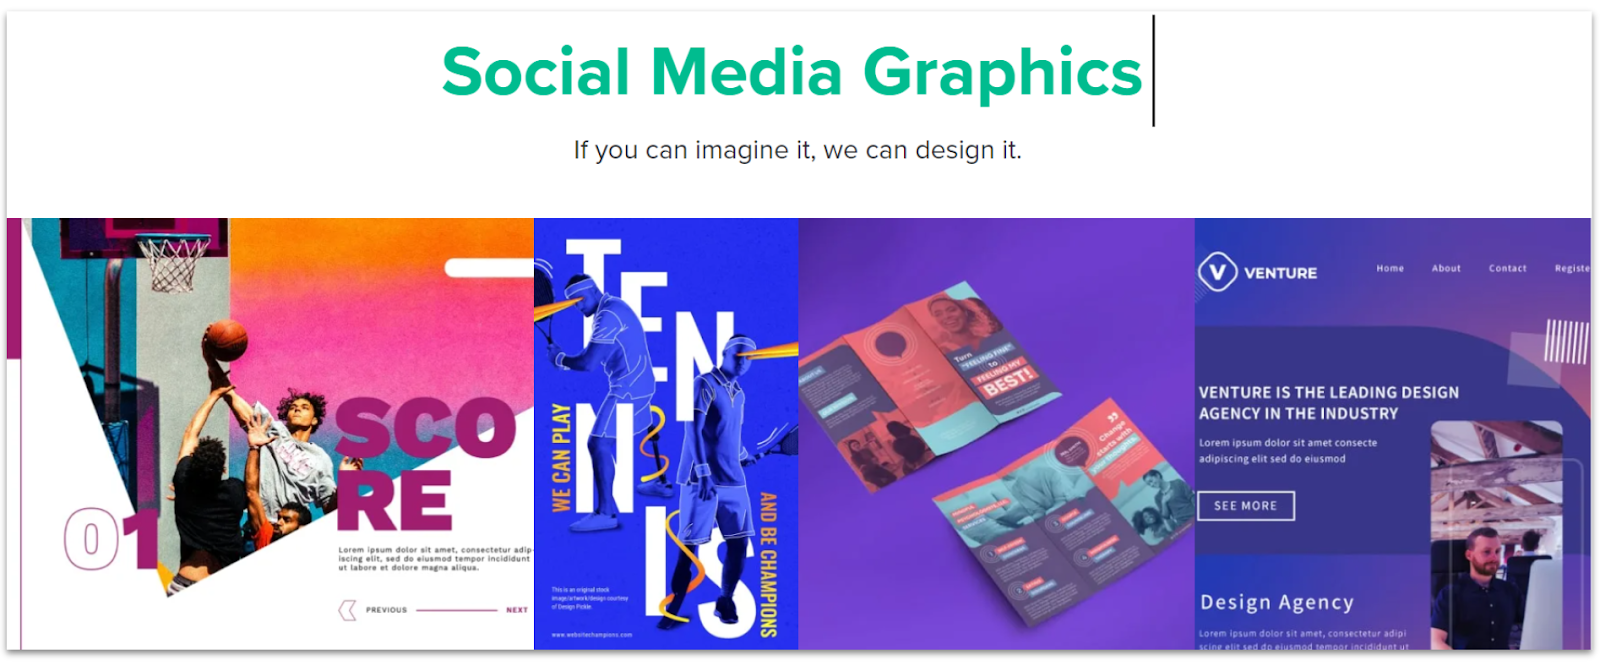 DesignPickle's social media graphic design services